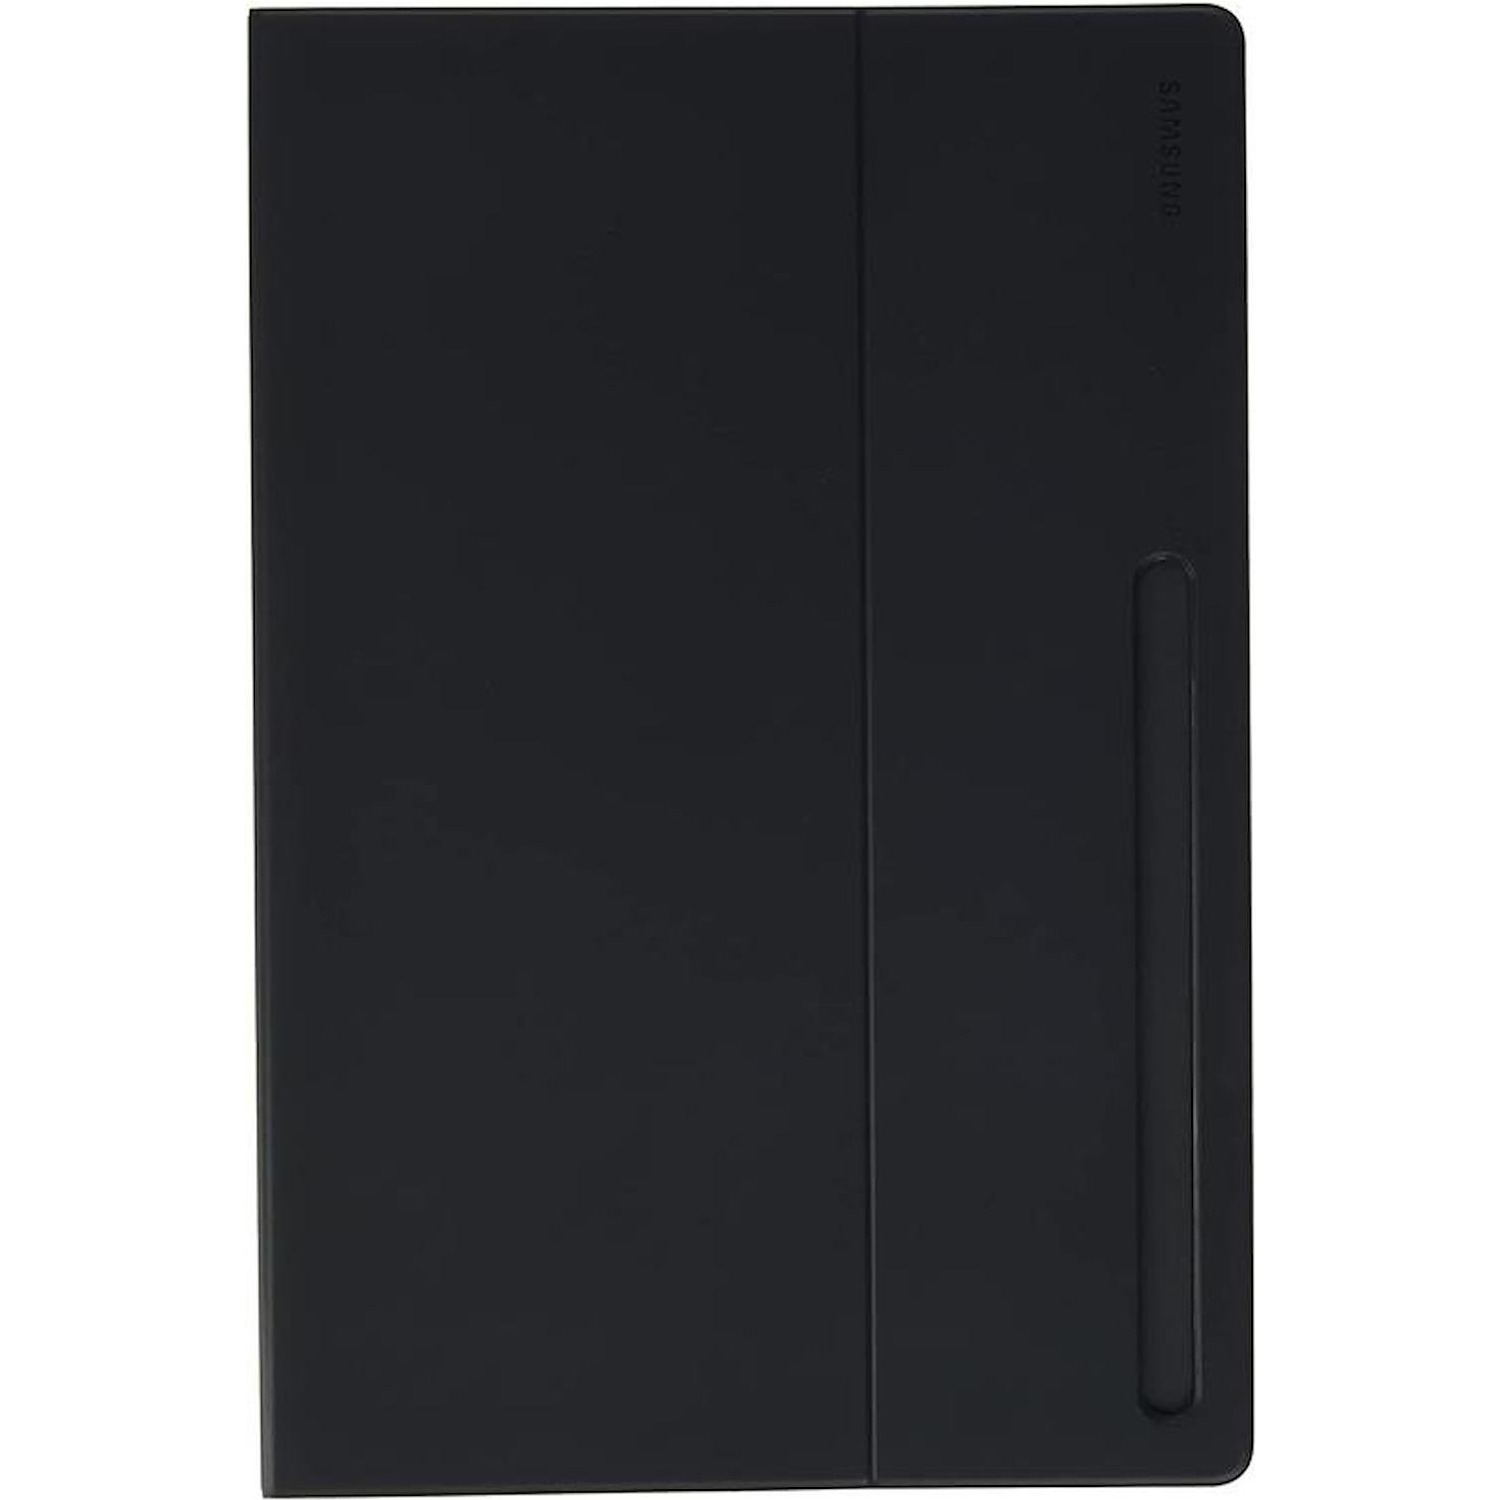 Immagine per Book cover Samsung per Tablet S8 ultra nera da DIMOStore